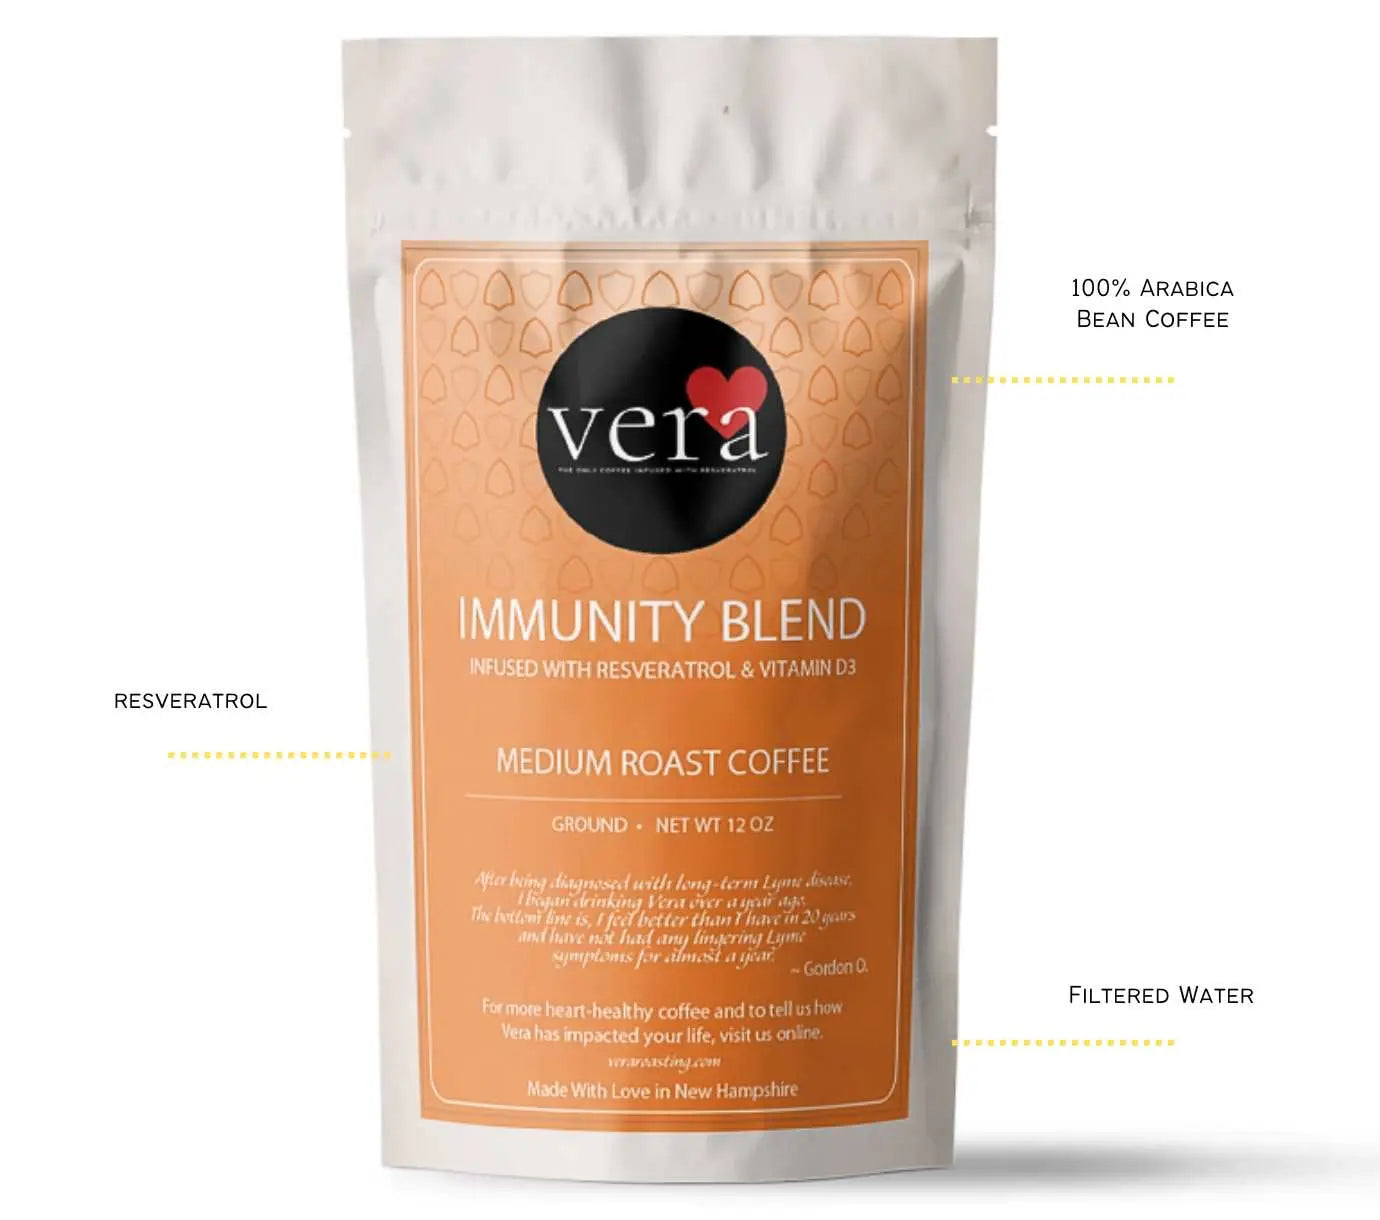 Decaf Immunity Blend Vera Roasting Co.